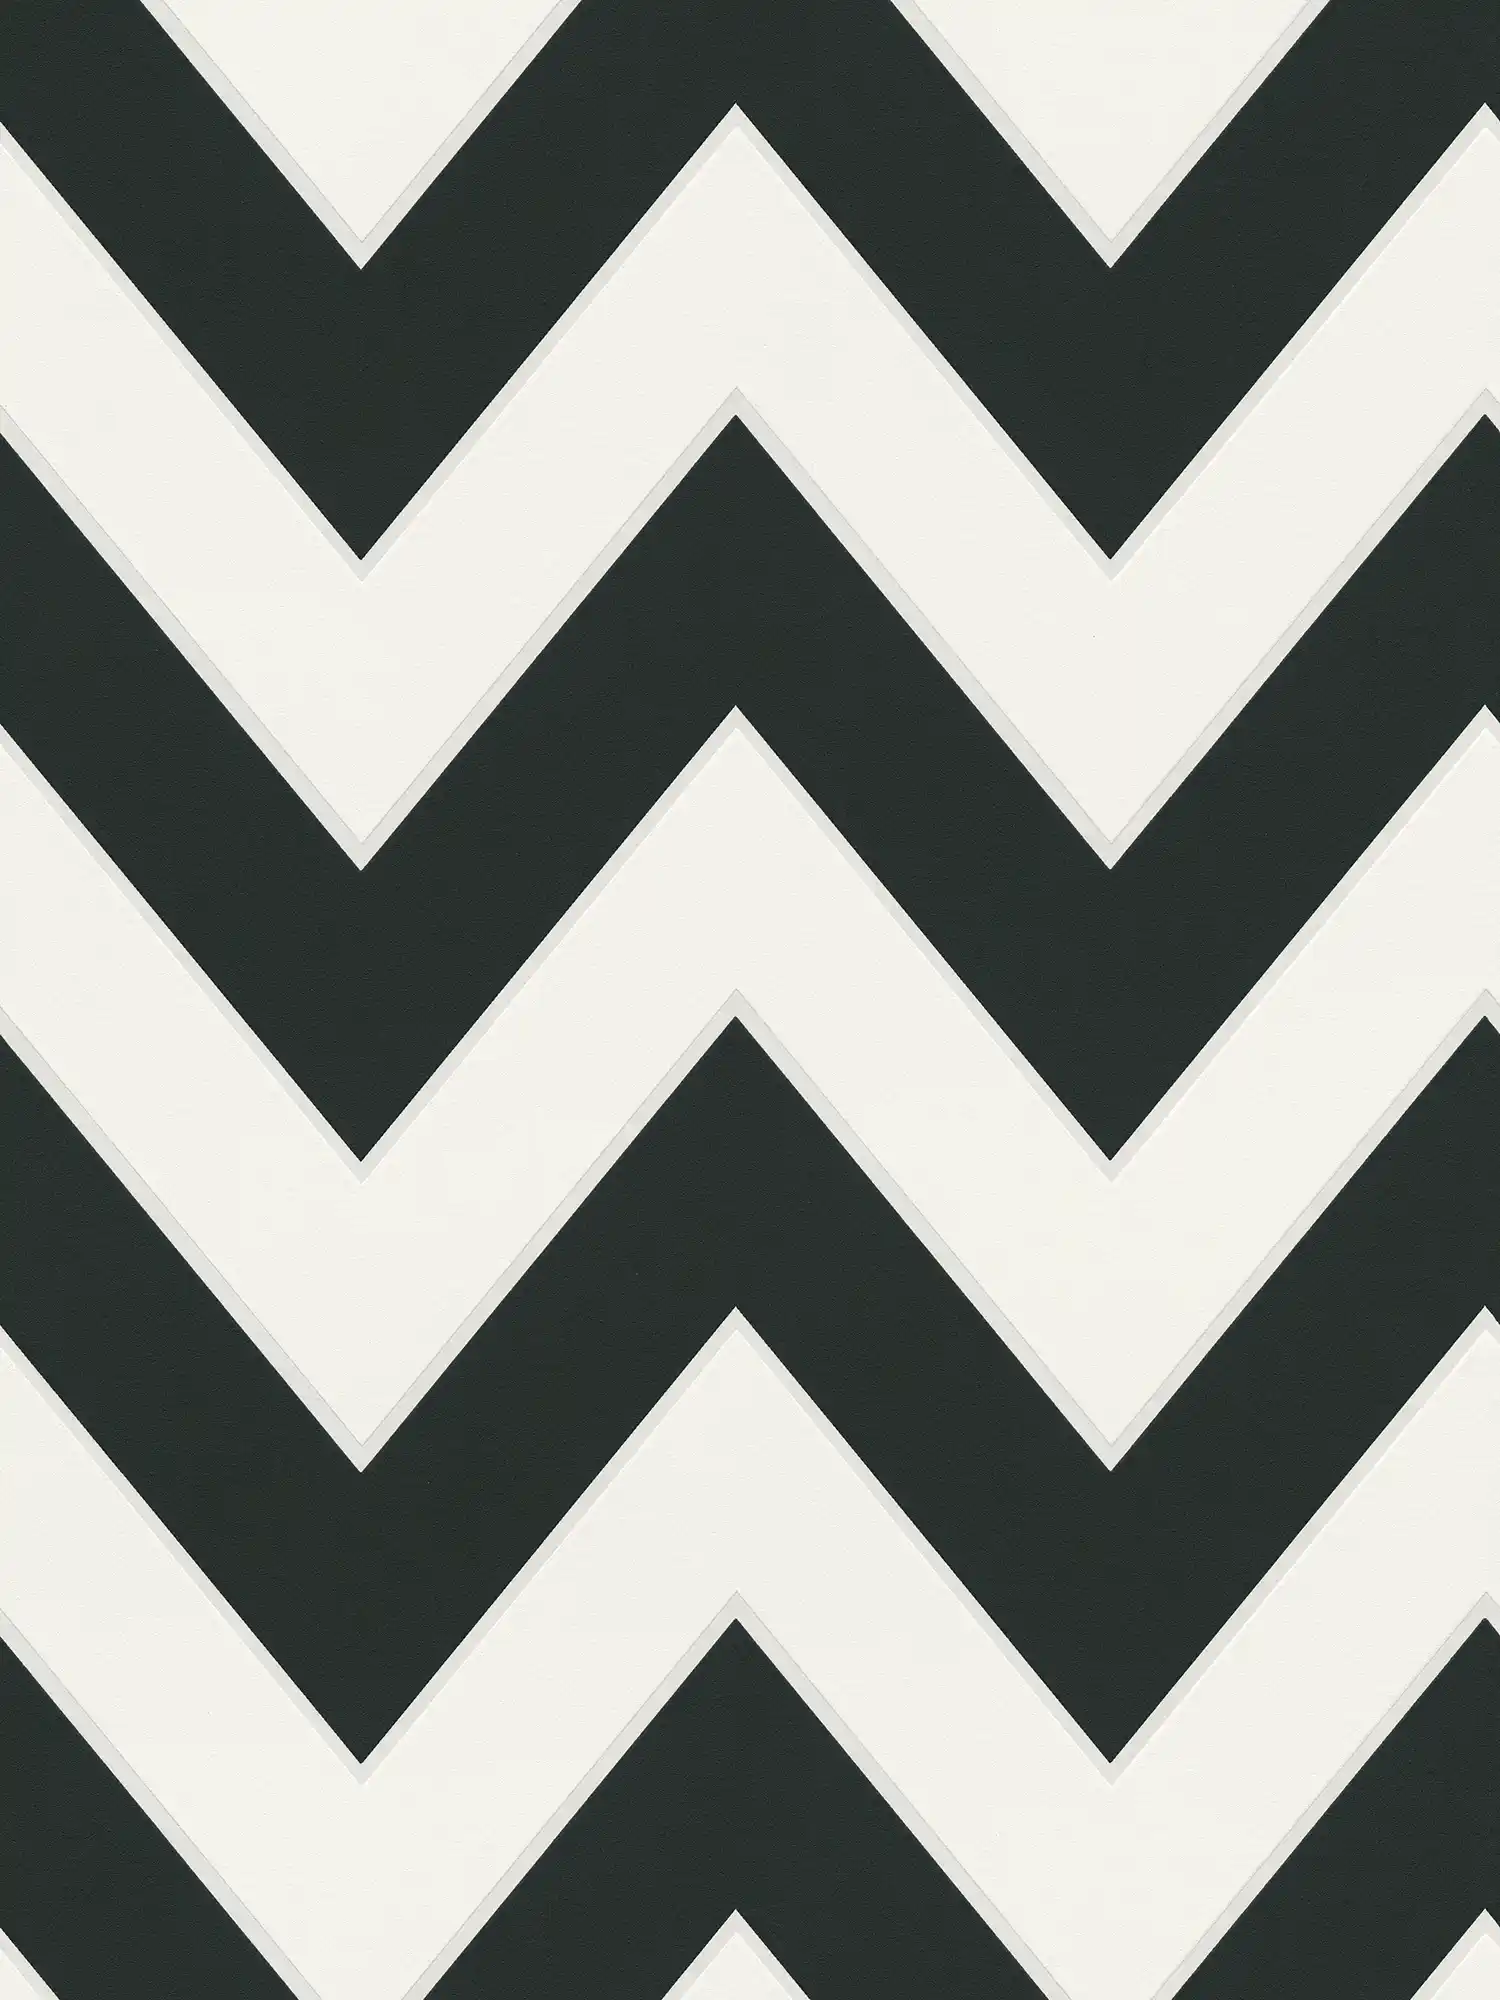 Wallpaper zigzag stripes in black and white
